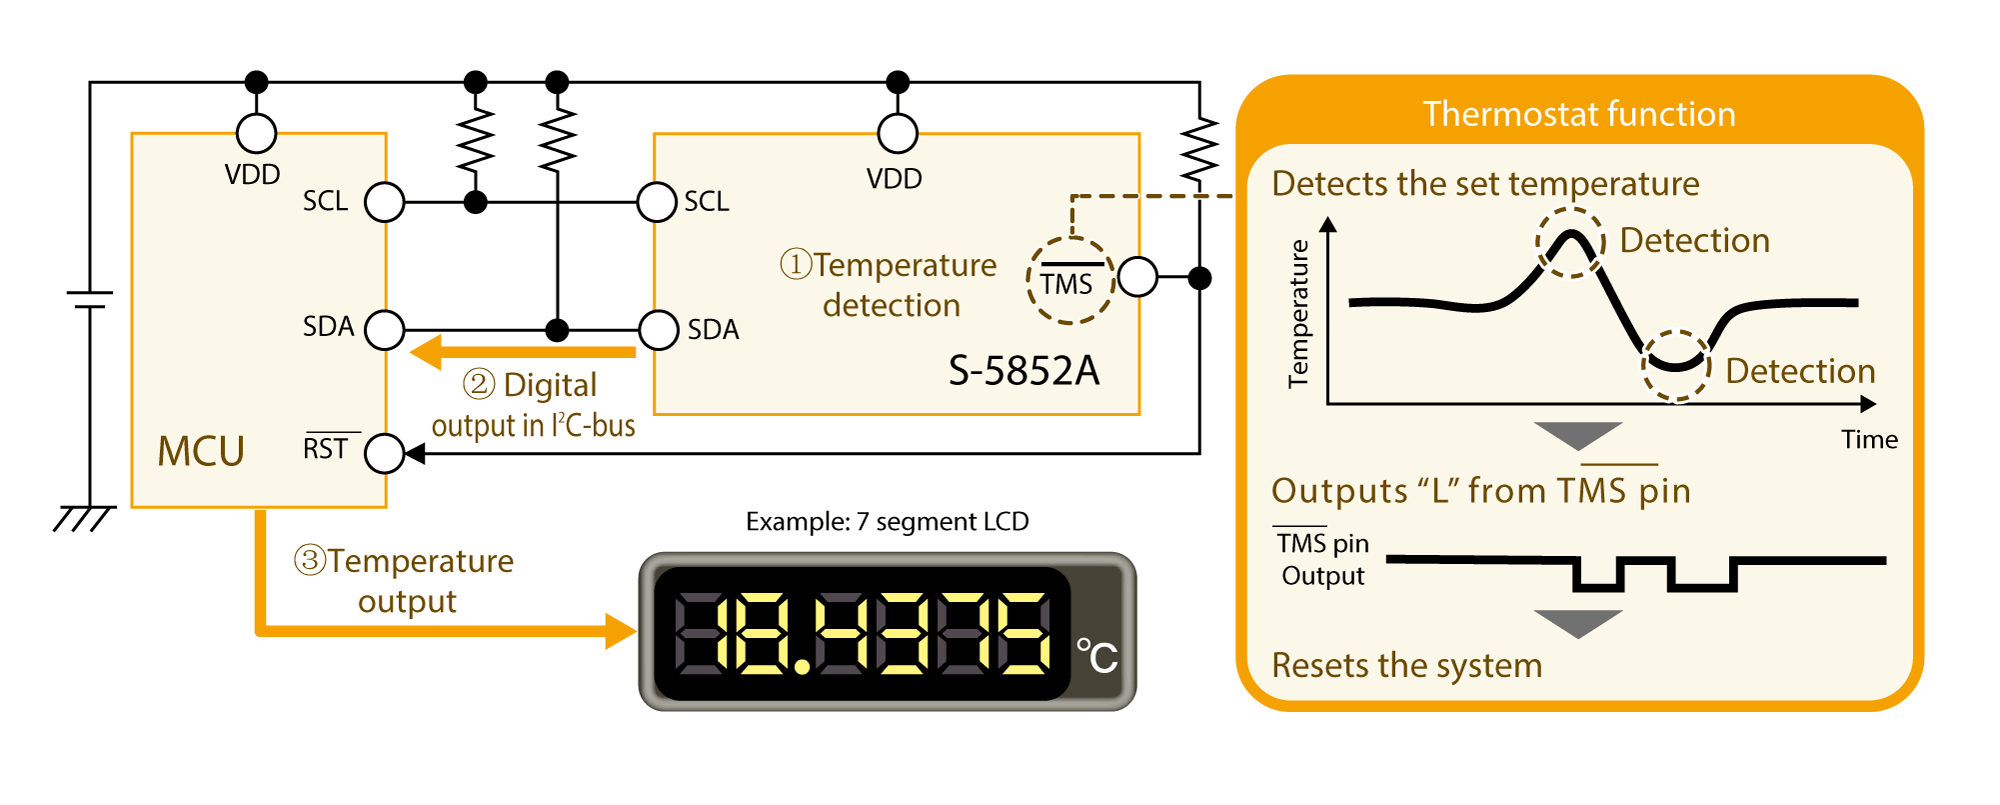 Semiconductor Temperature Sensor  How it works, Application & Advantages